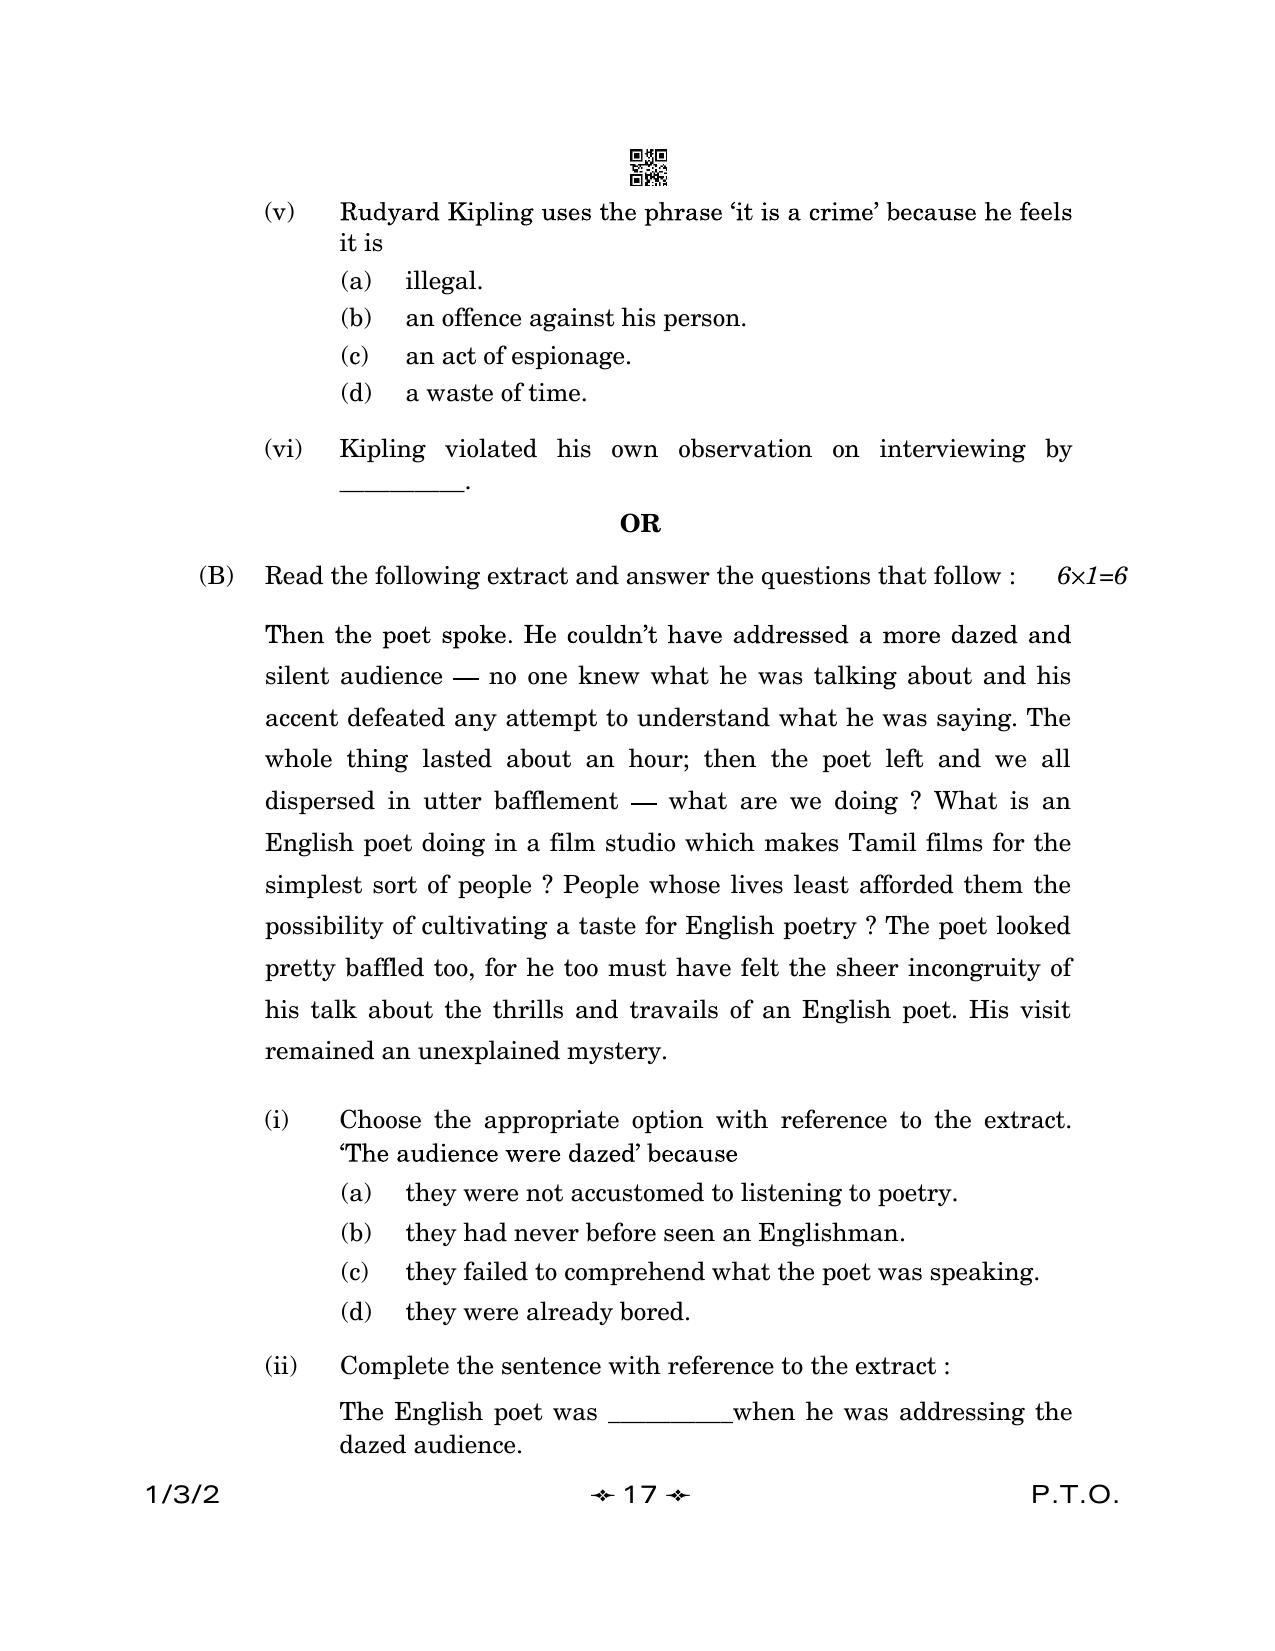 CBSE Class 12 1-3-2 English Core 2023 Question Paper - Page 17